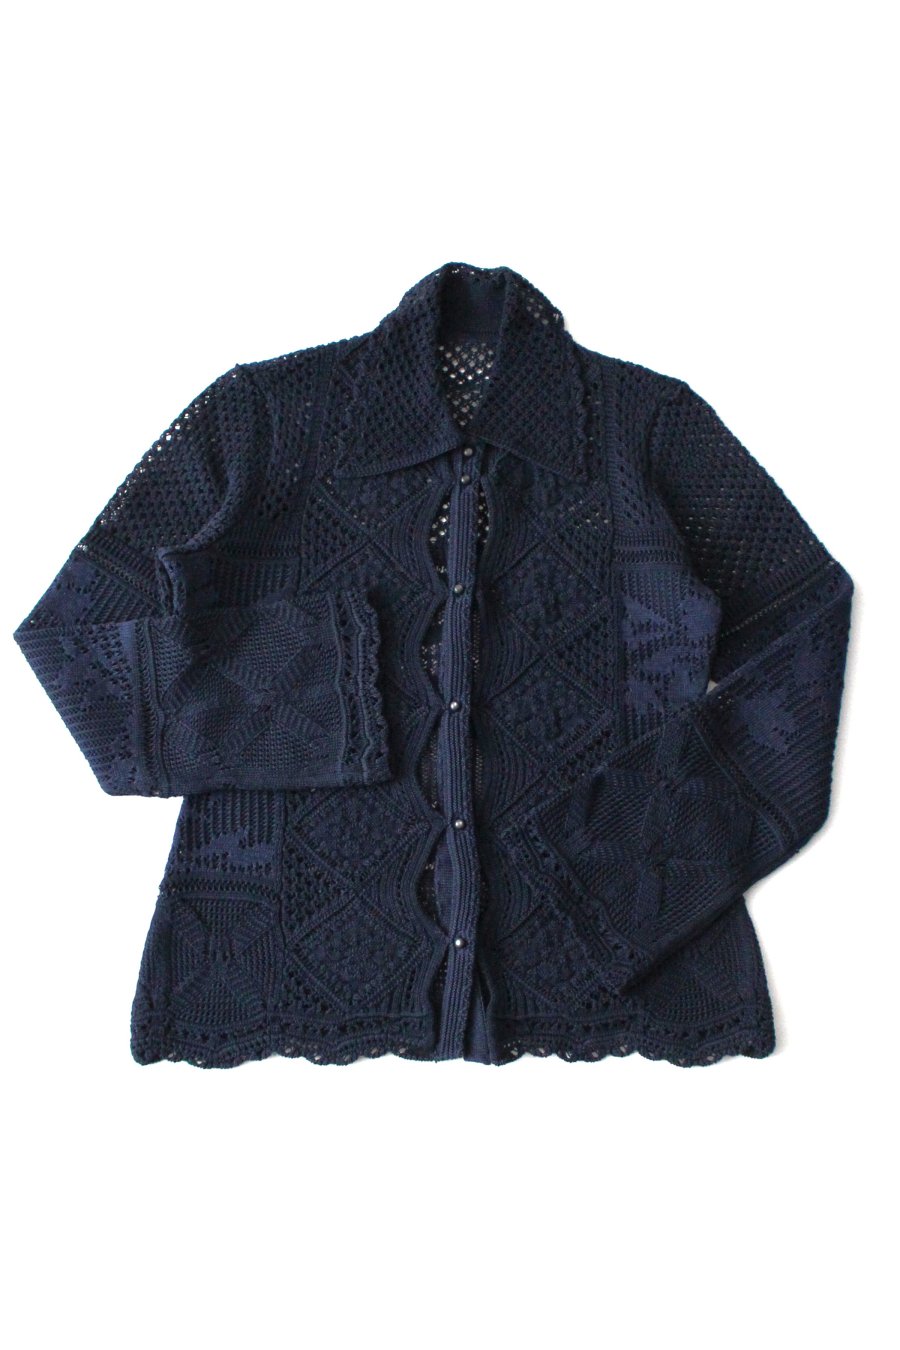 Mame Kurogouchi（マメ クロゴウチ）Cotton Lace Knitted Cardigan 